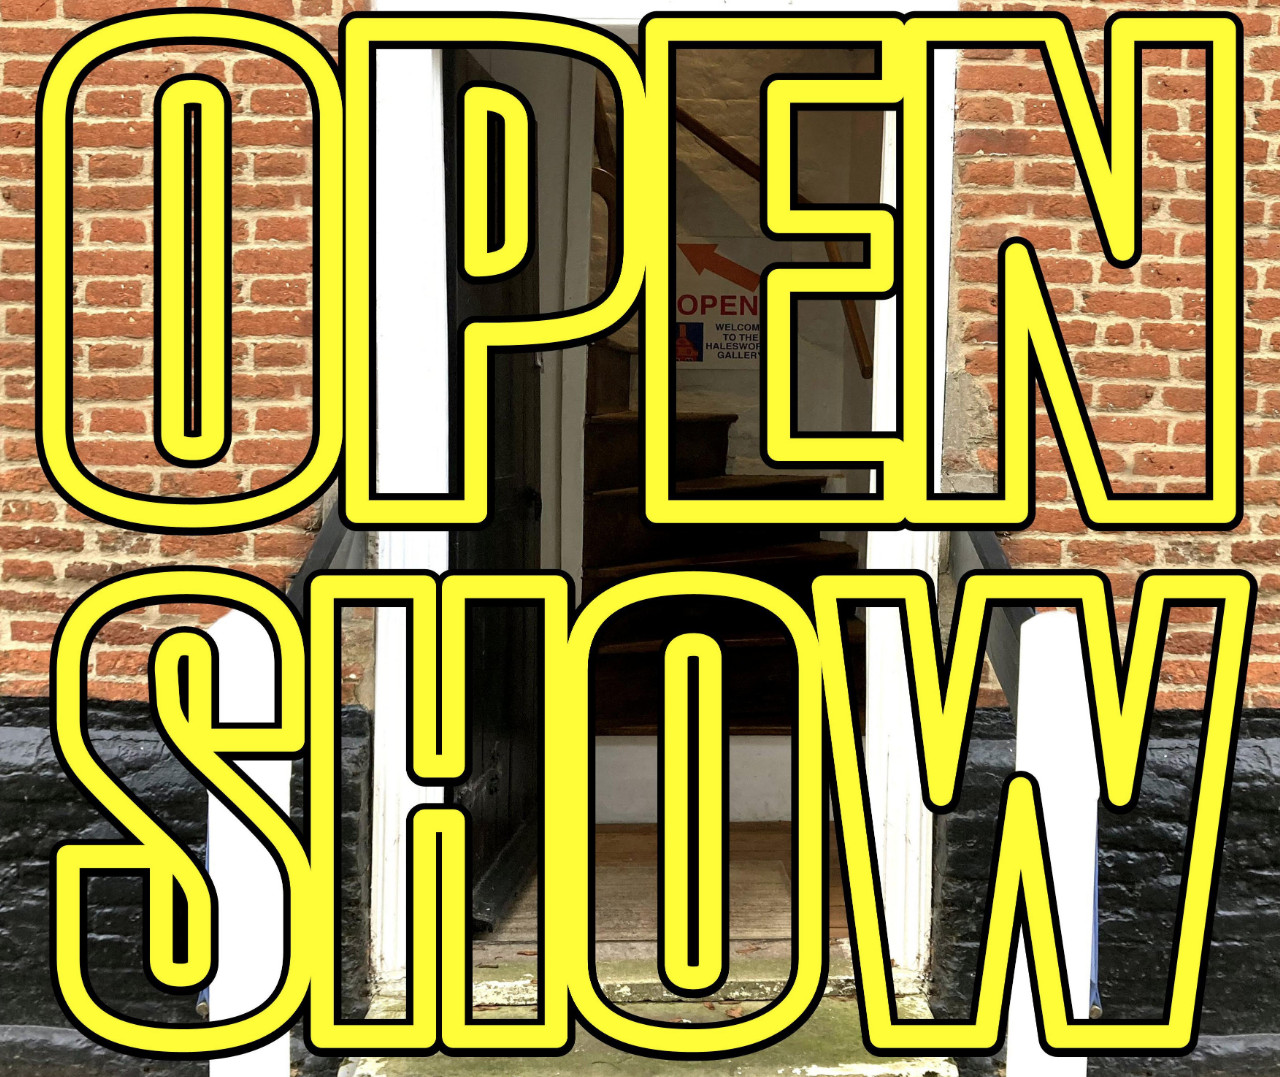 Open Show